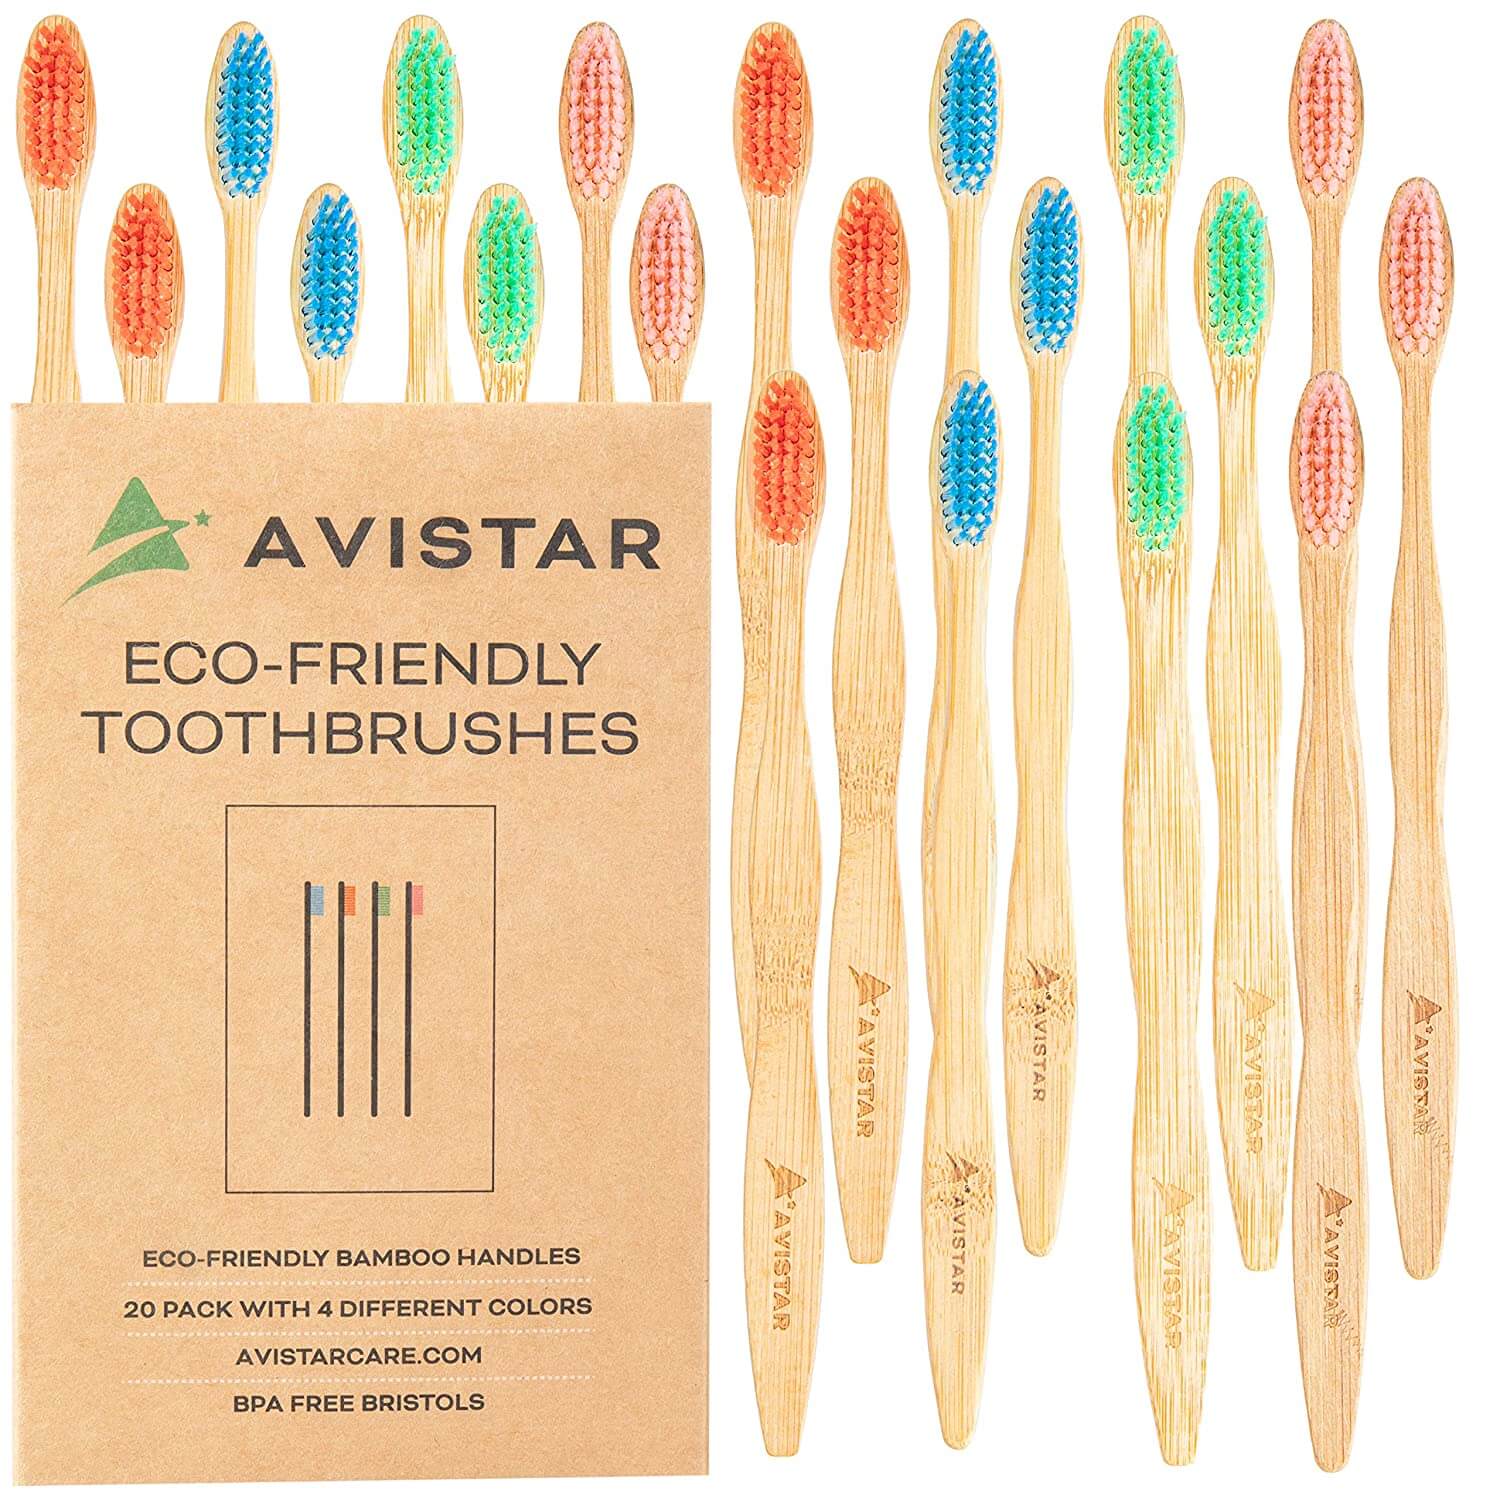 Avistar Eco-Friendly best Bamboo Toothbrush in india